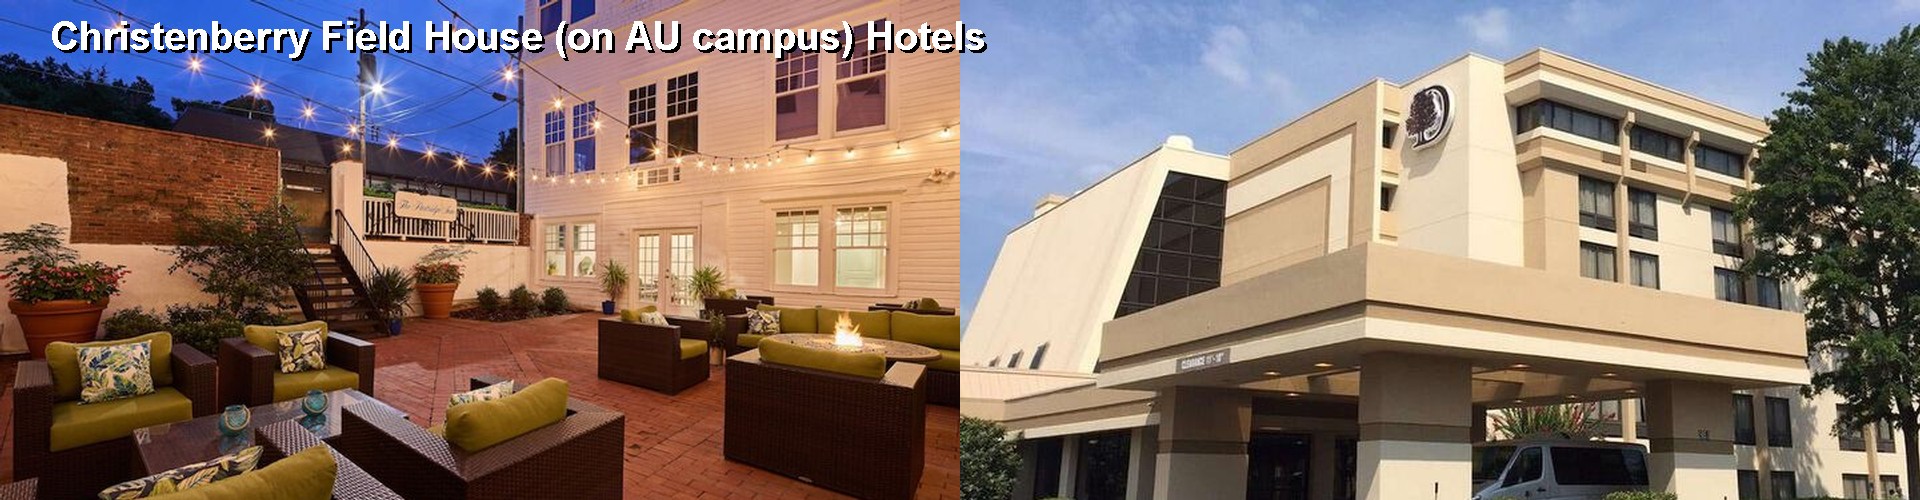 5 Best Hotels near Christenberry Field House (on AU campus)